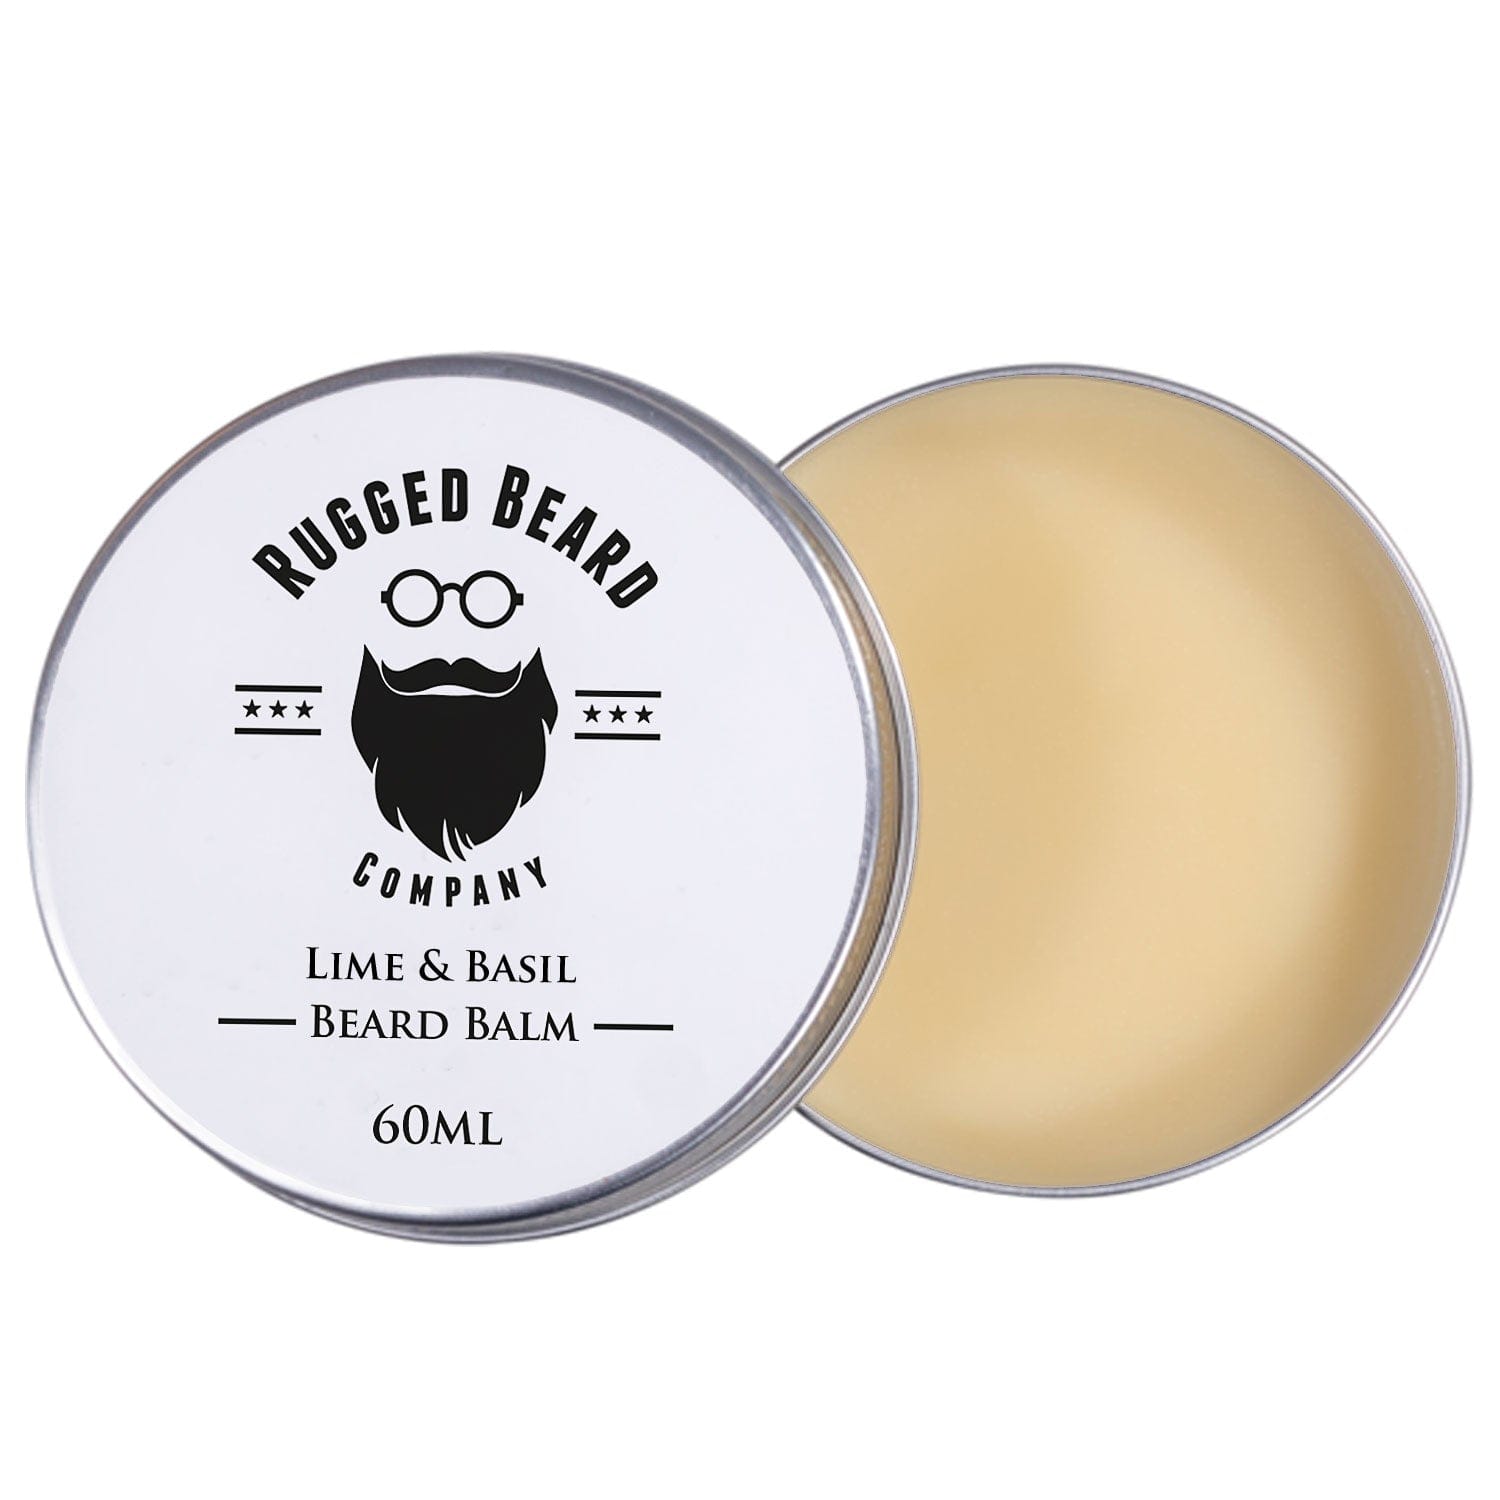 Lime & Basil Beard Balm - The Rugged Beard Company